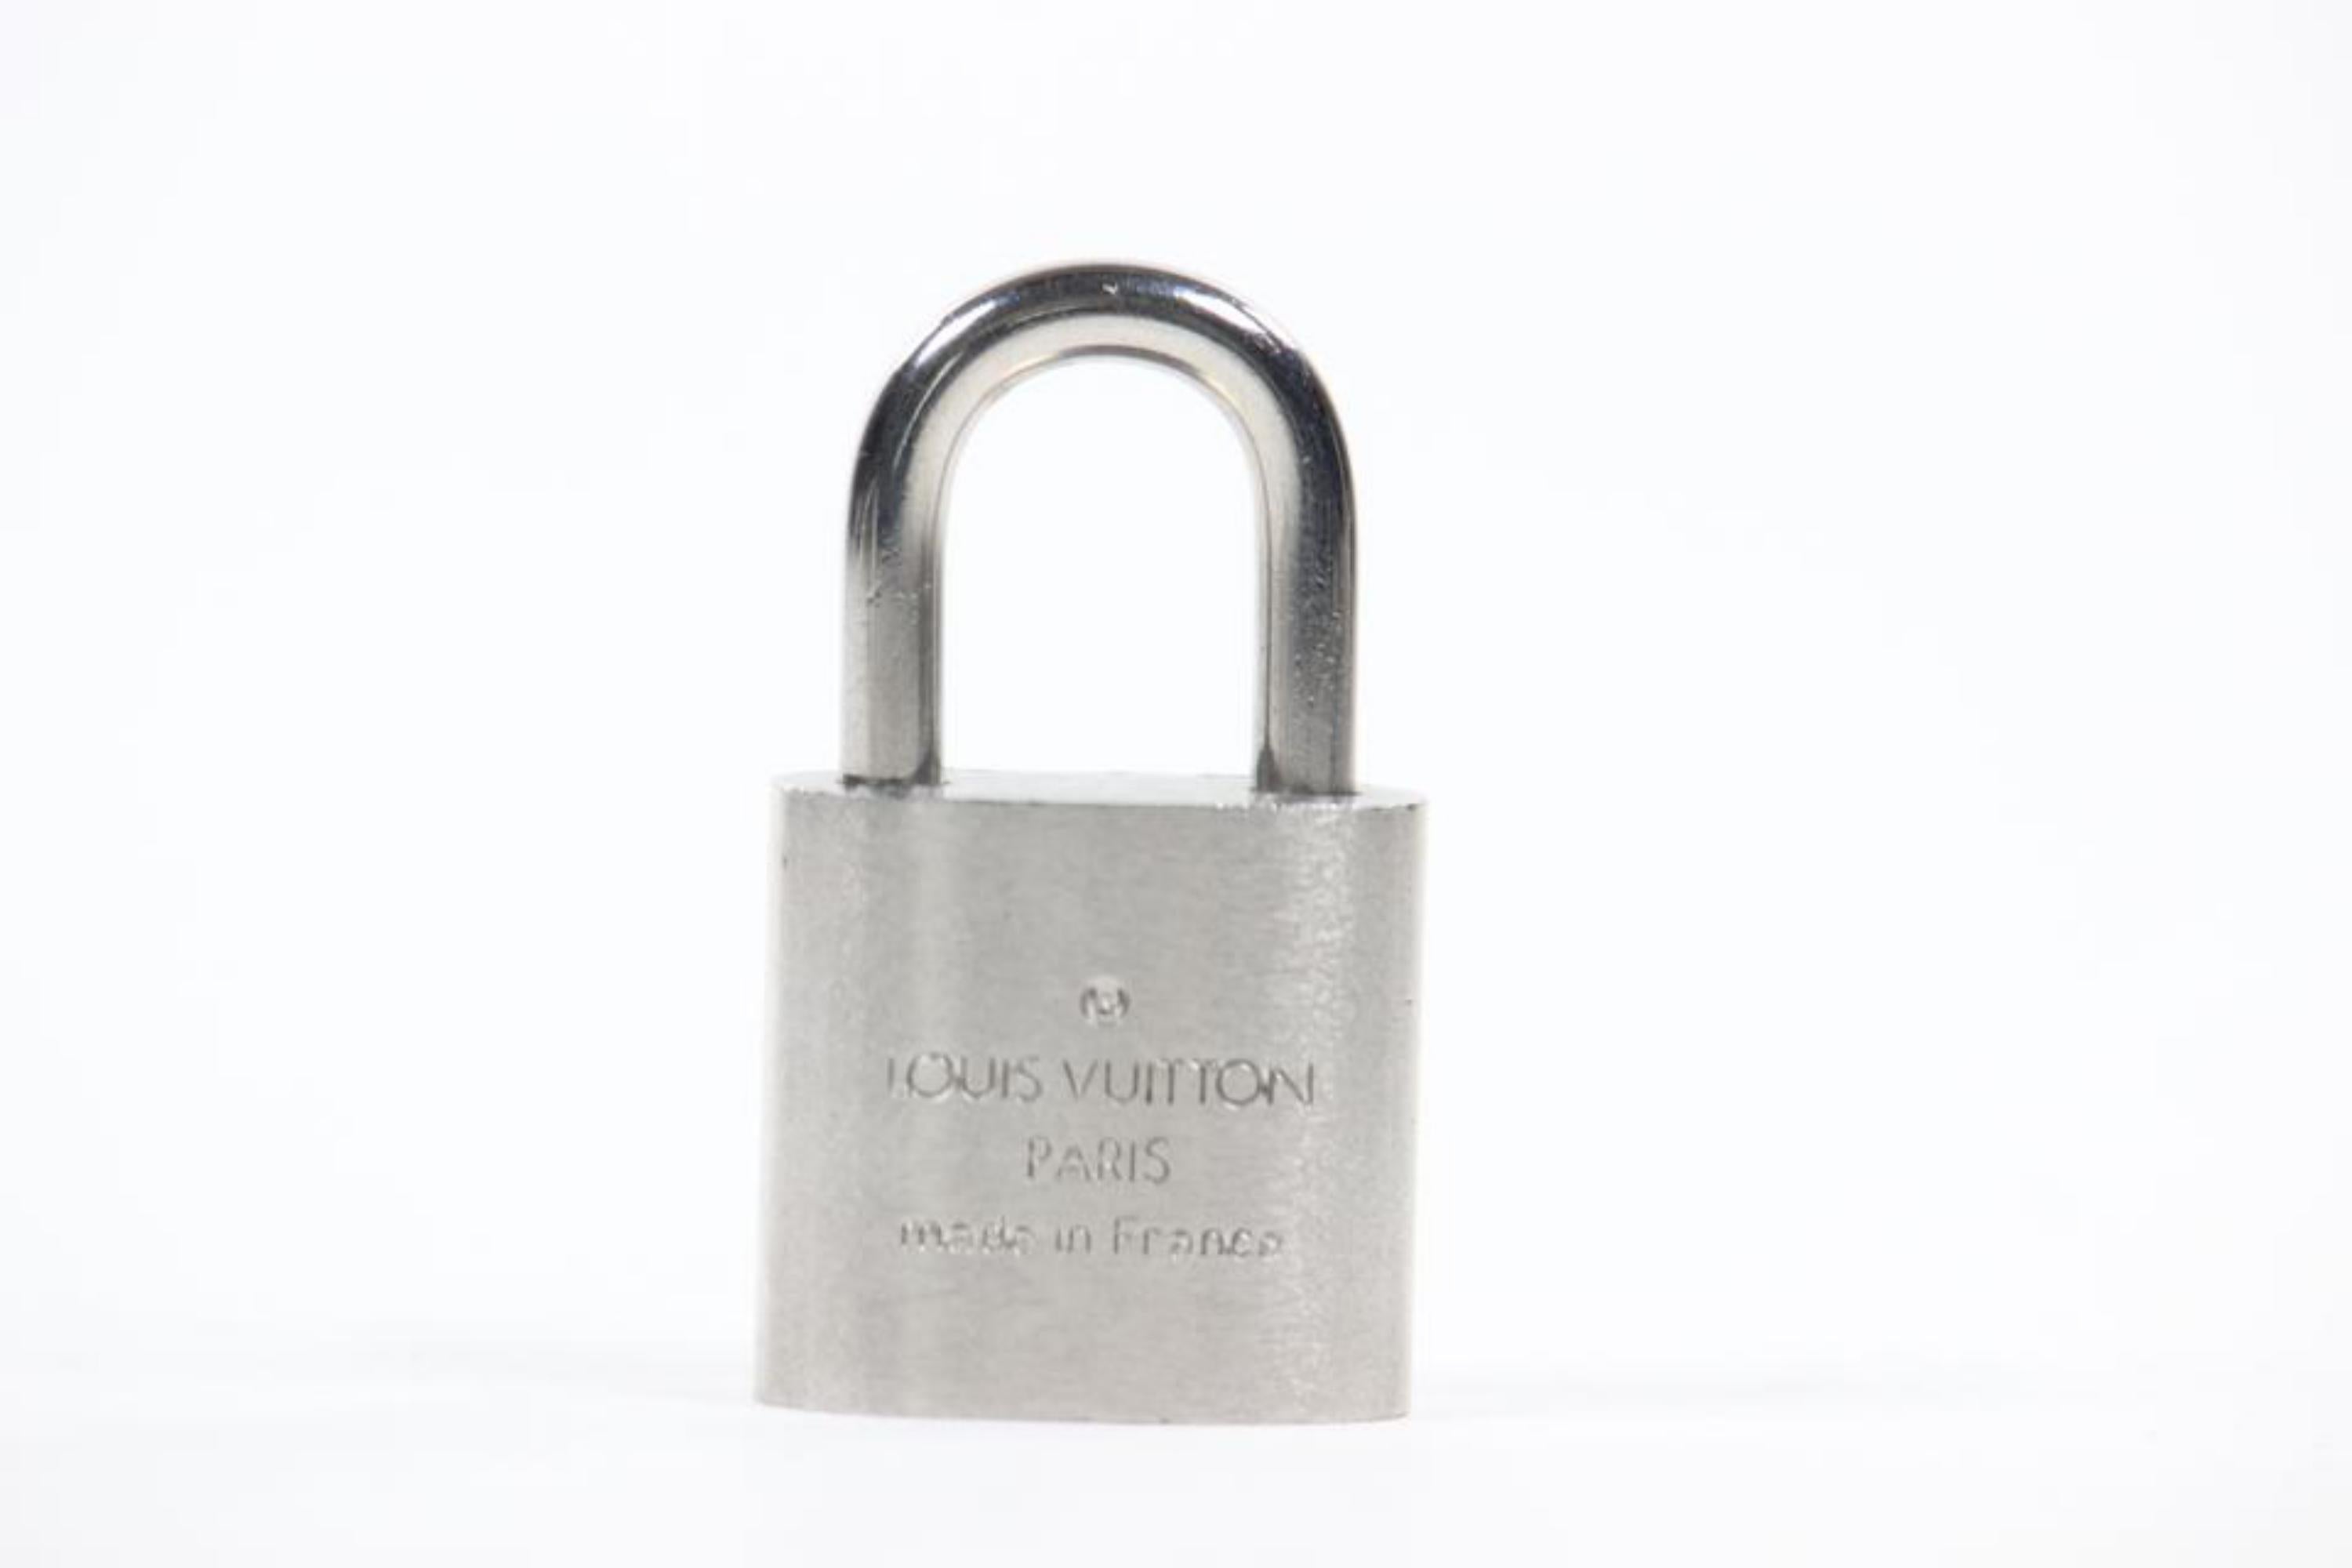 Louis Vuitton Brushed Silver Matte Padlock and Key Bag Charm Lock Set 7LZ1102 2